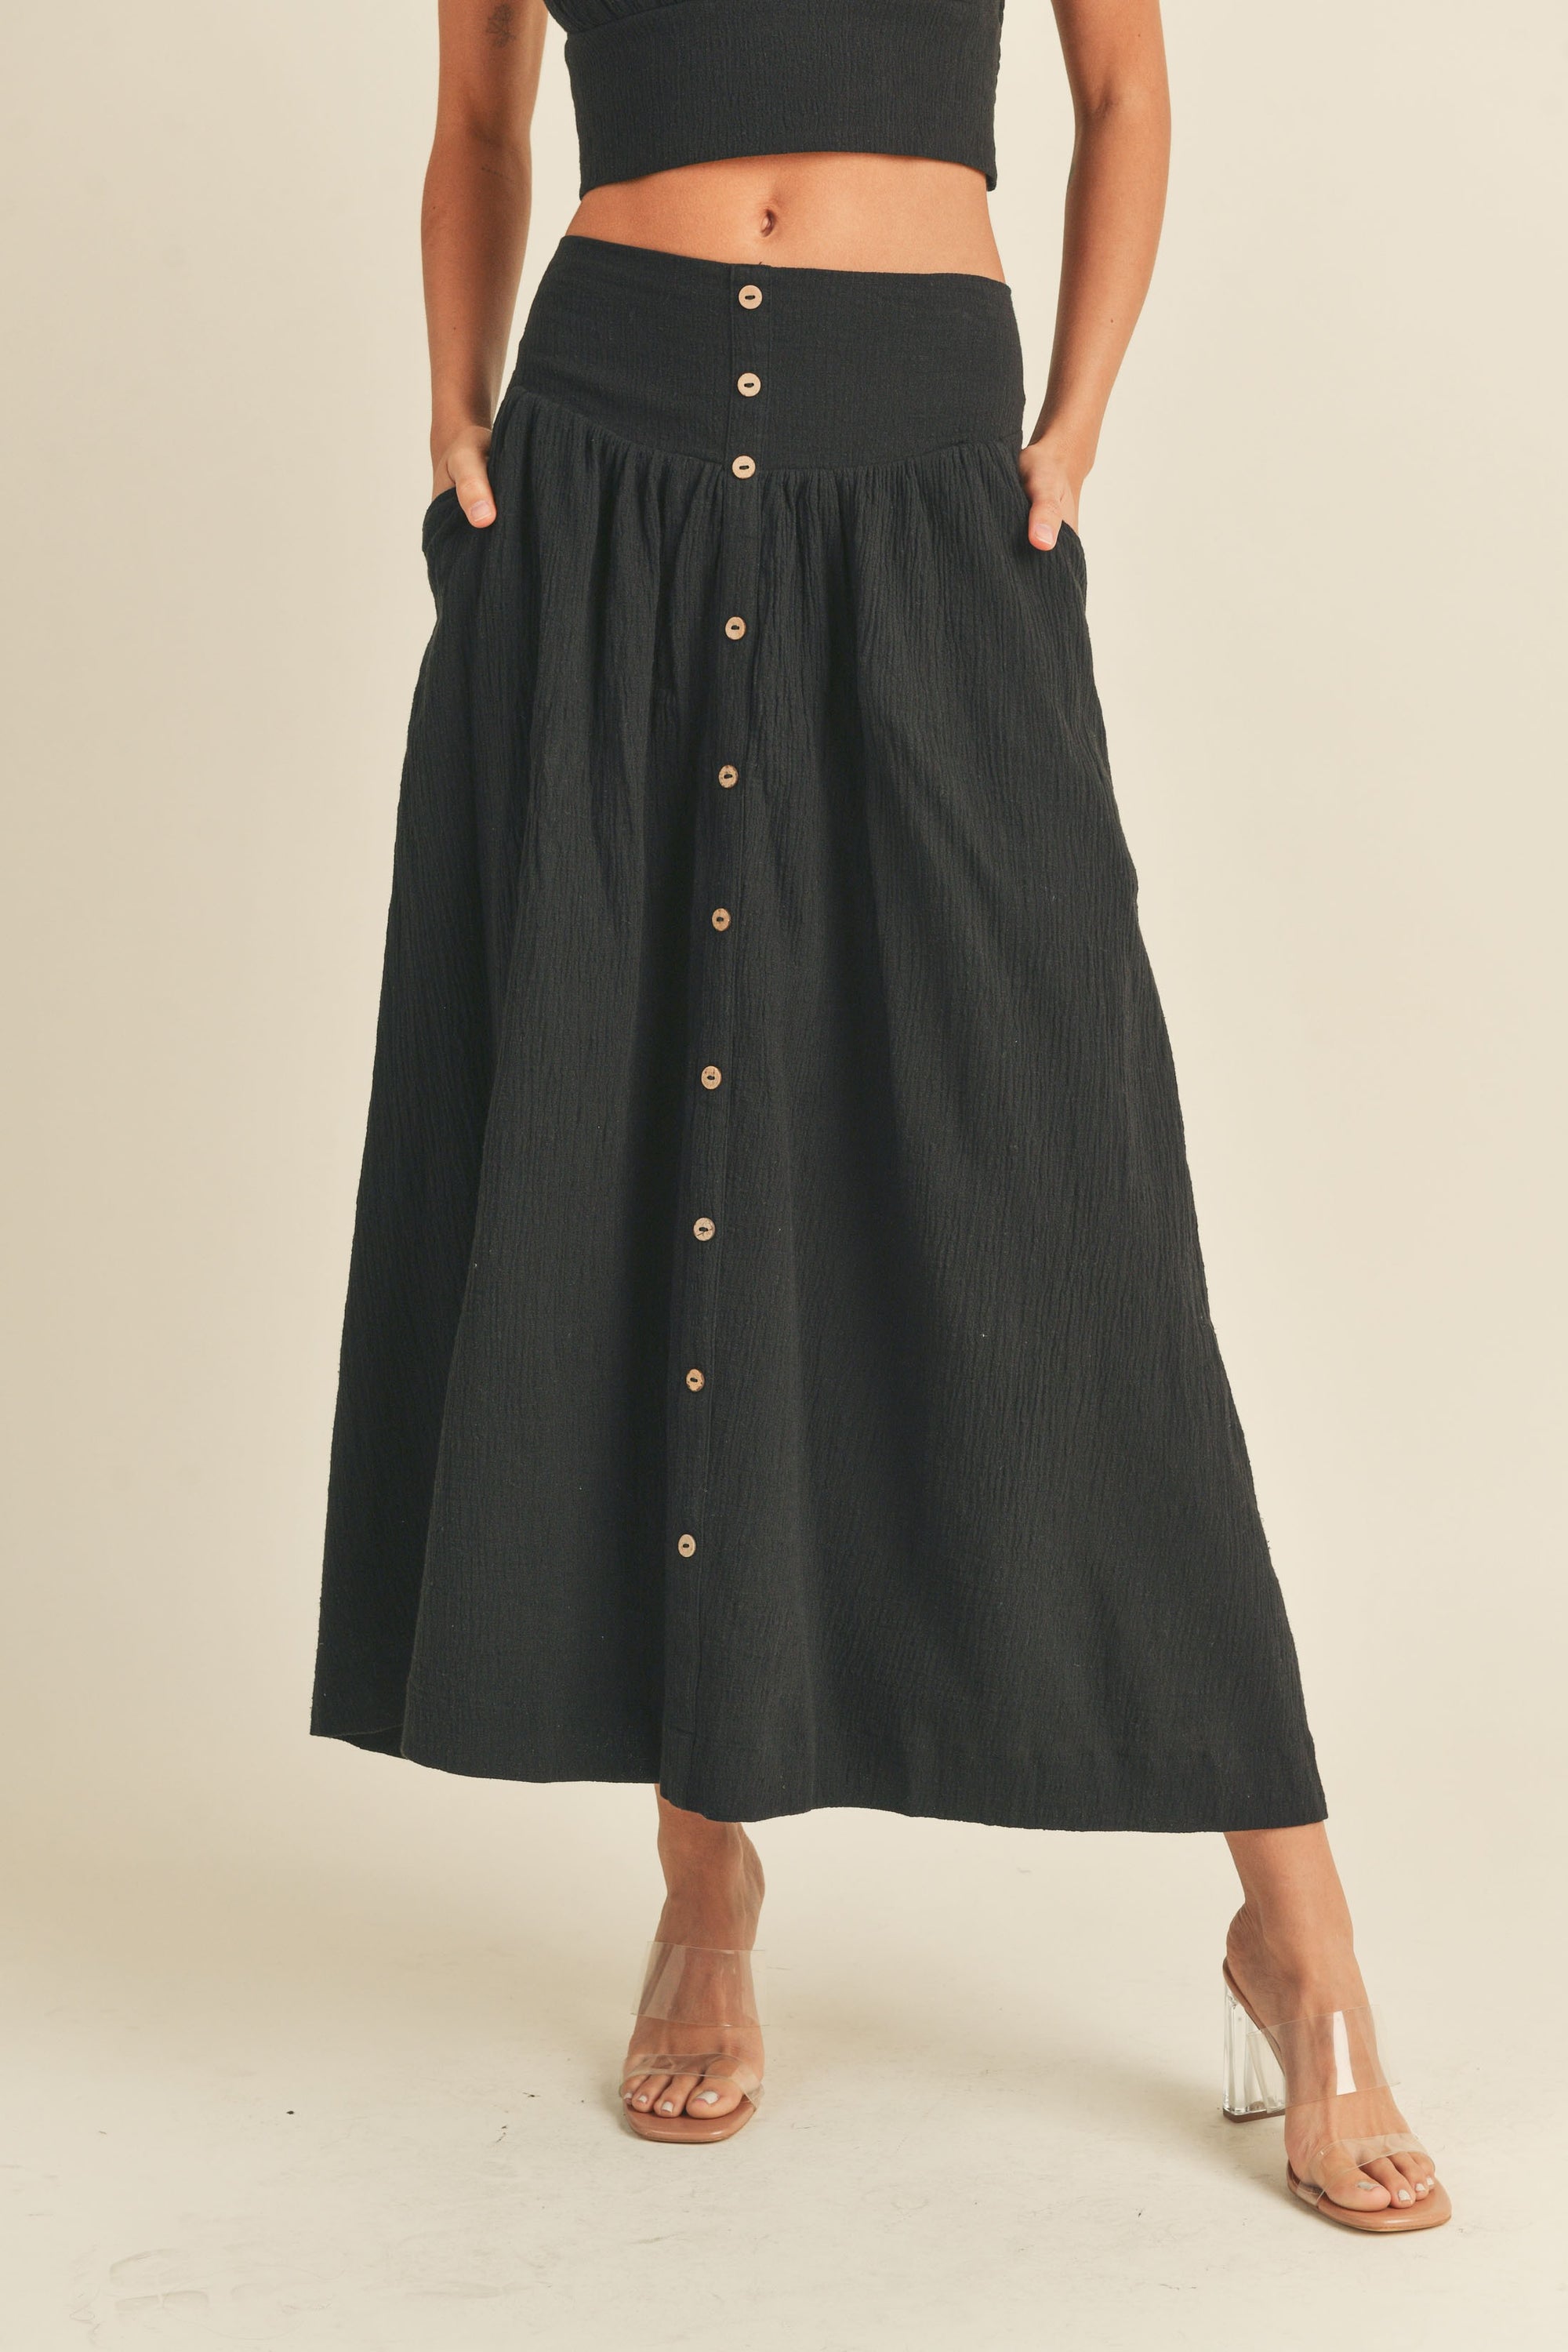 The Stori Halter Top + Skirt Set - Sold Separately